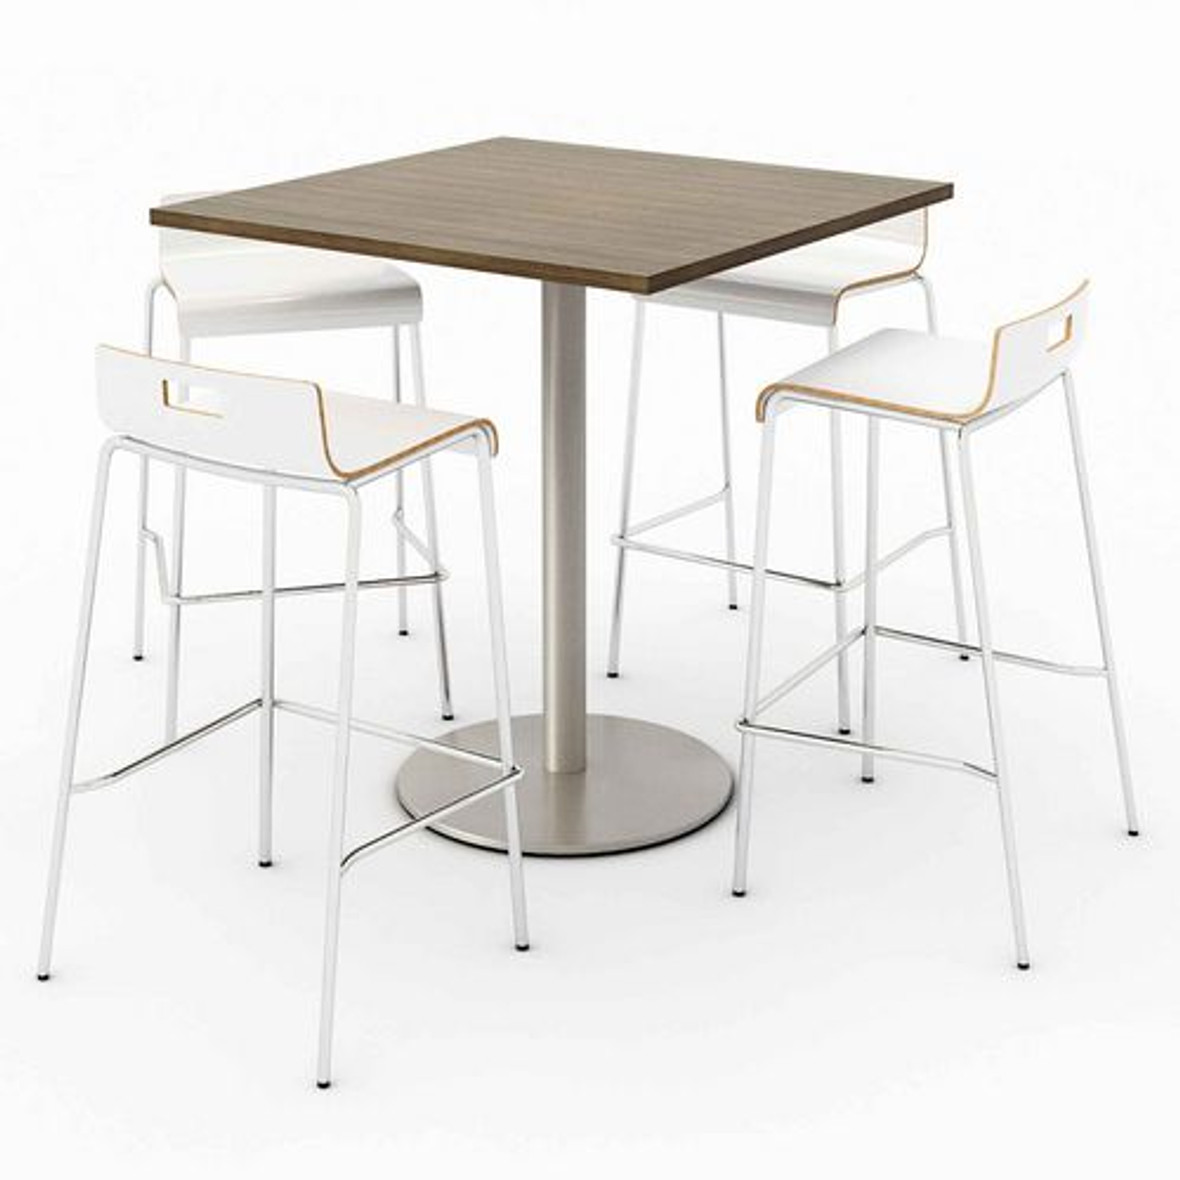 KFI Studios Pedestal Bistro Table With Four White Jive Series Barstools, Square, 36 X 36 X 41, Studio Teak, Ships In 4-6 Business Days